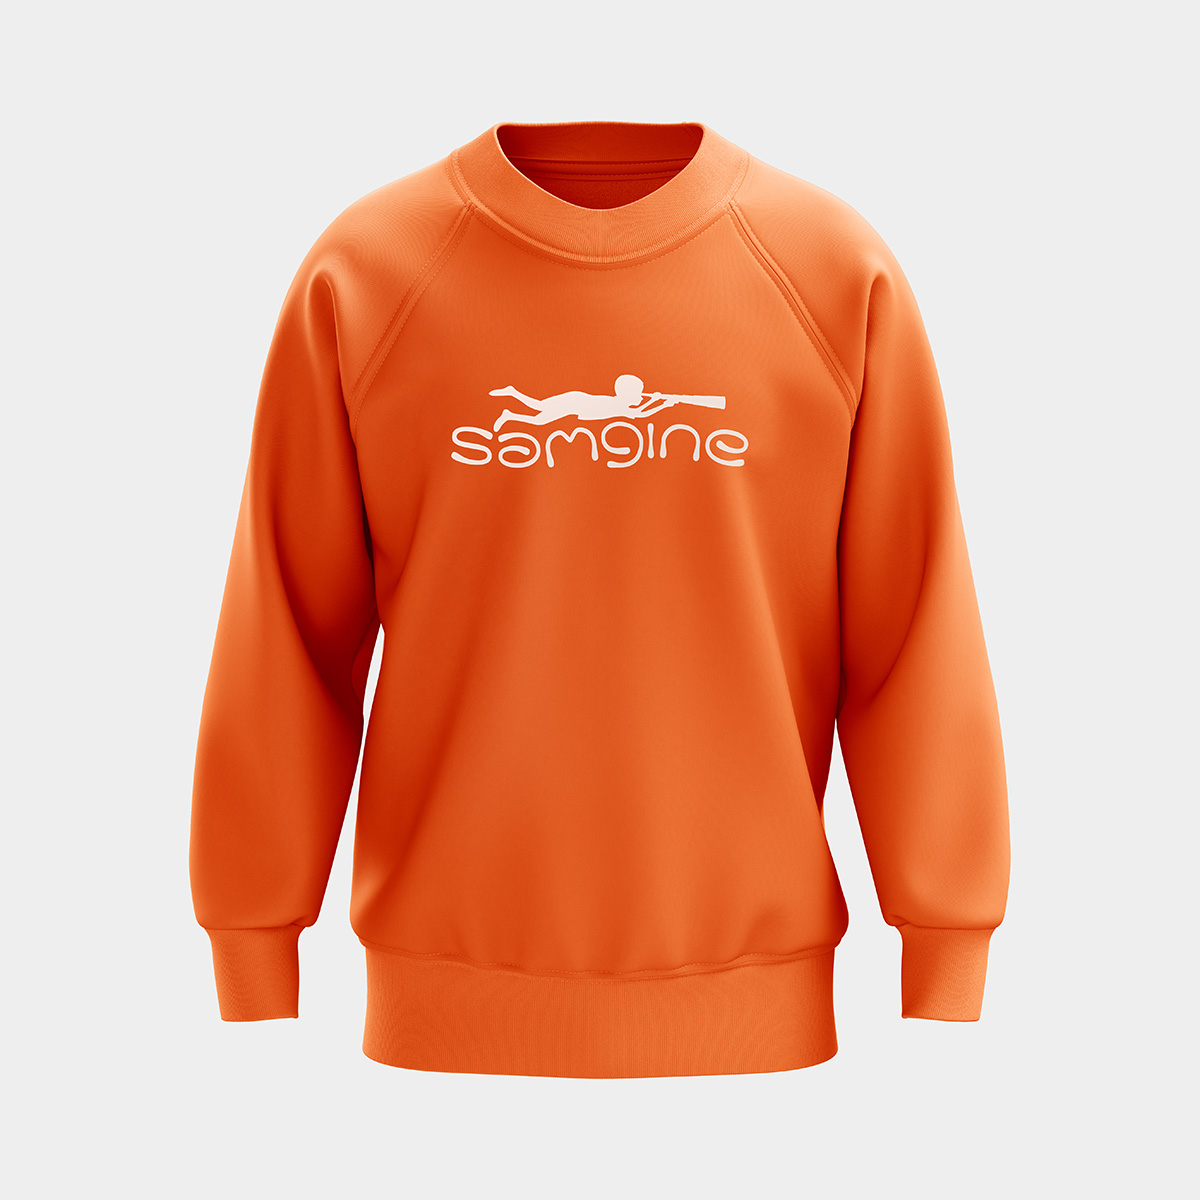 Samgine logo on an orange sweatshirt